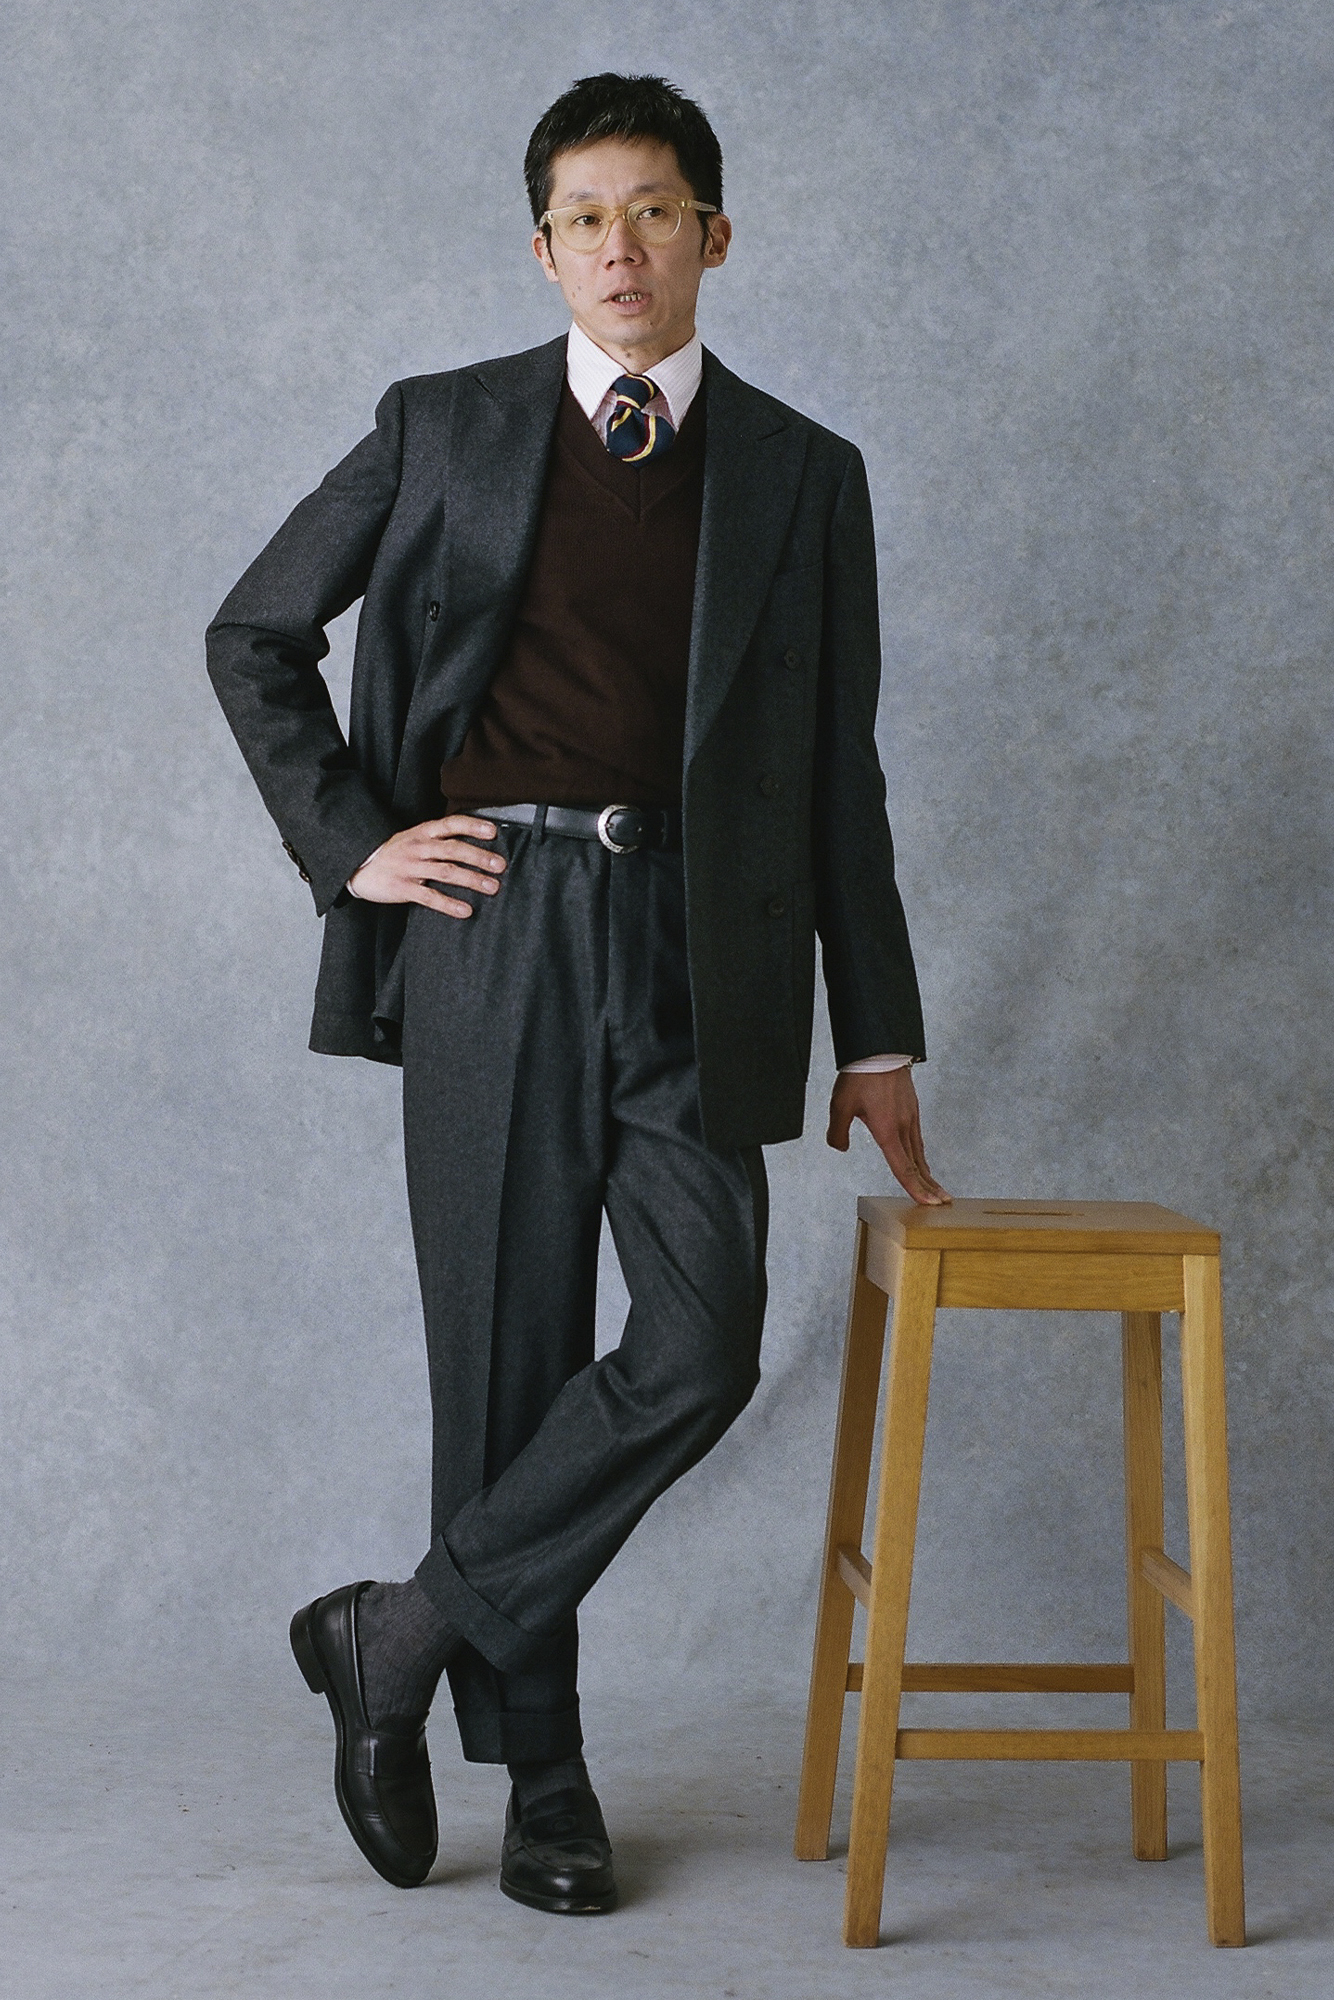 Man in suit leans against stool